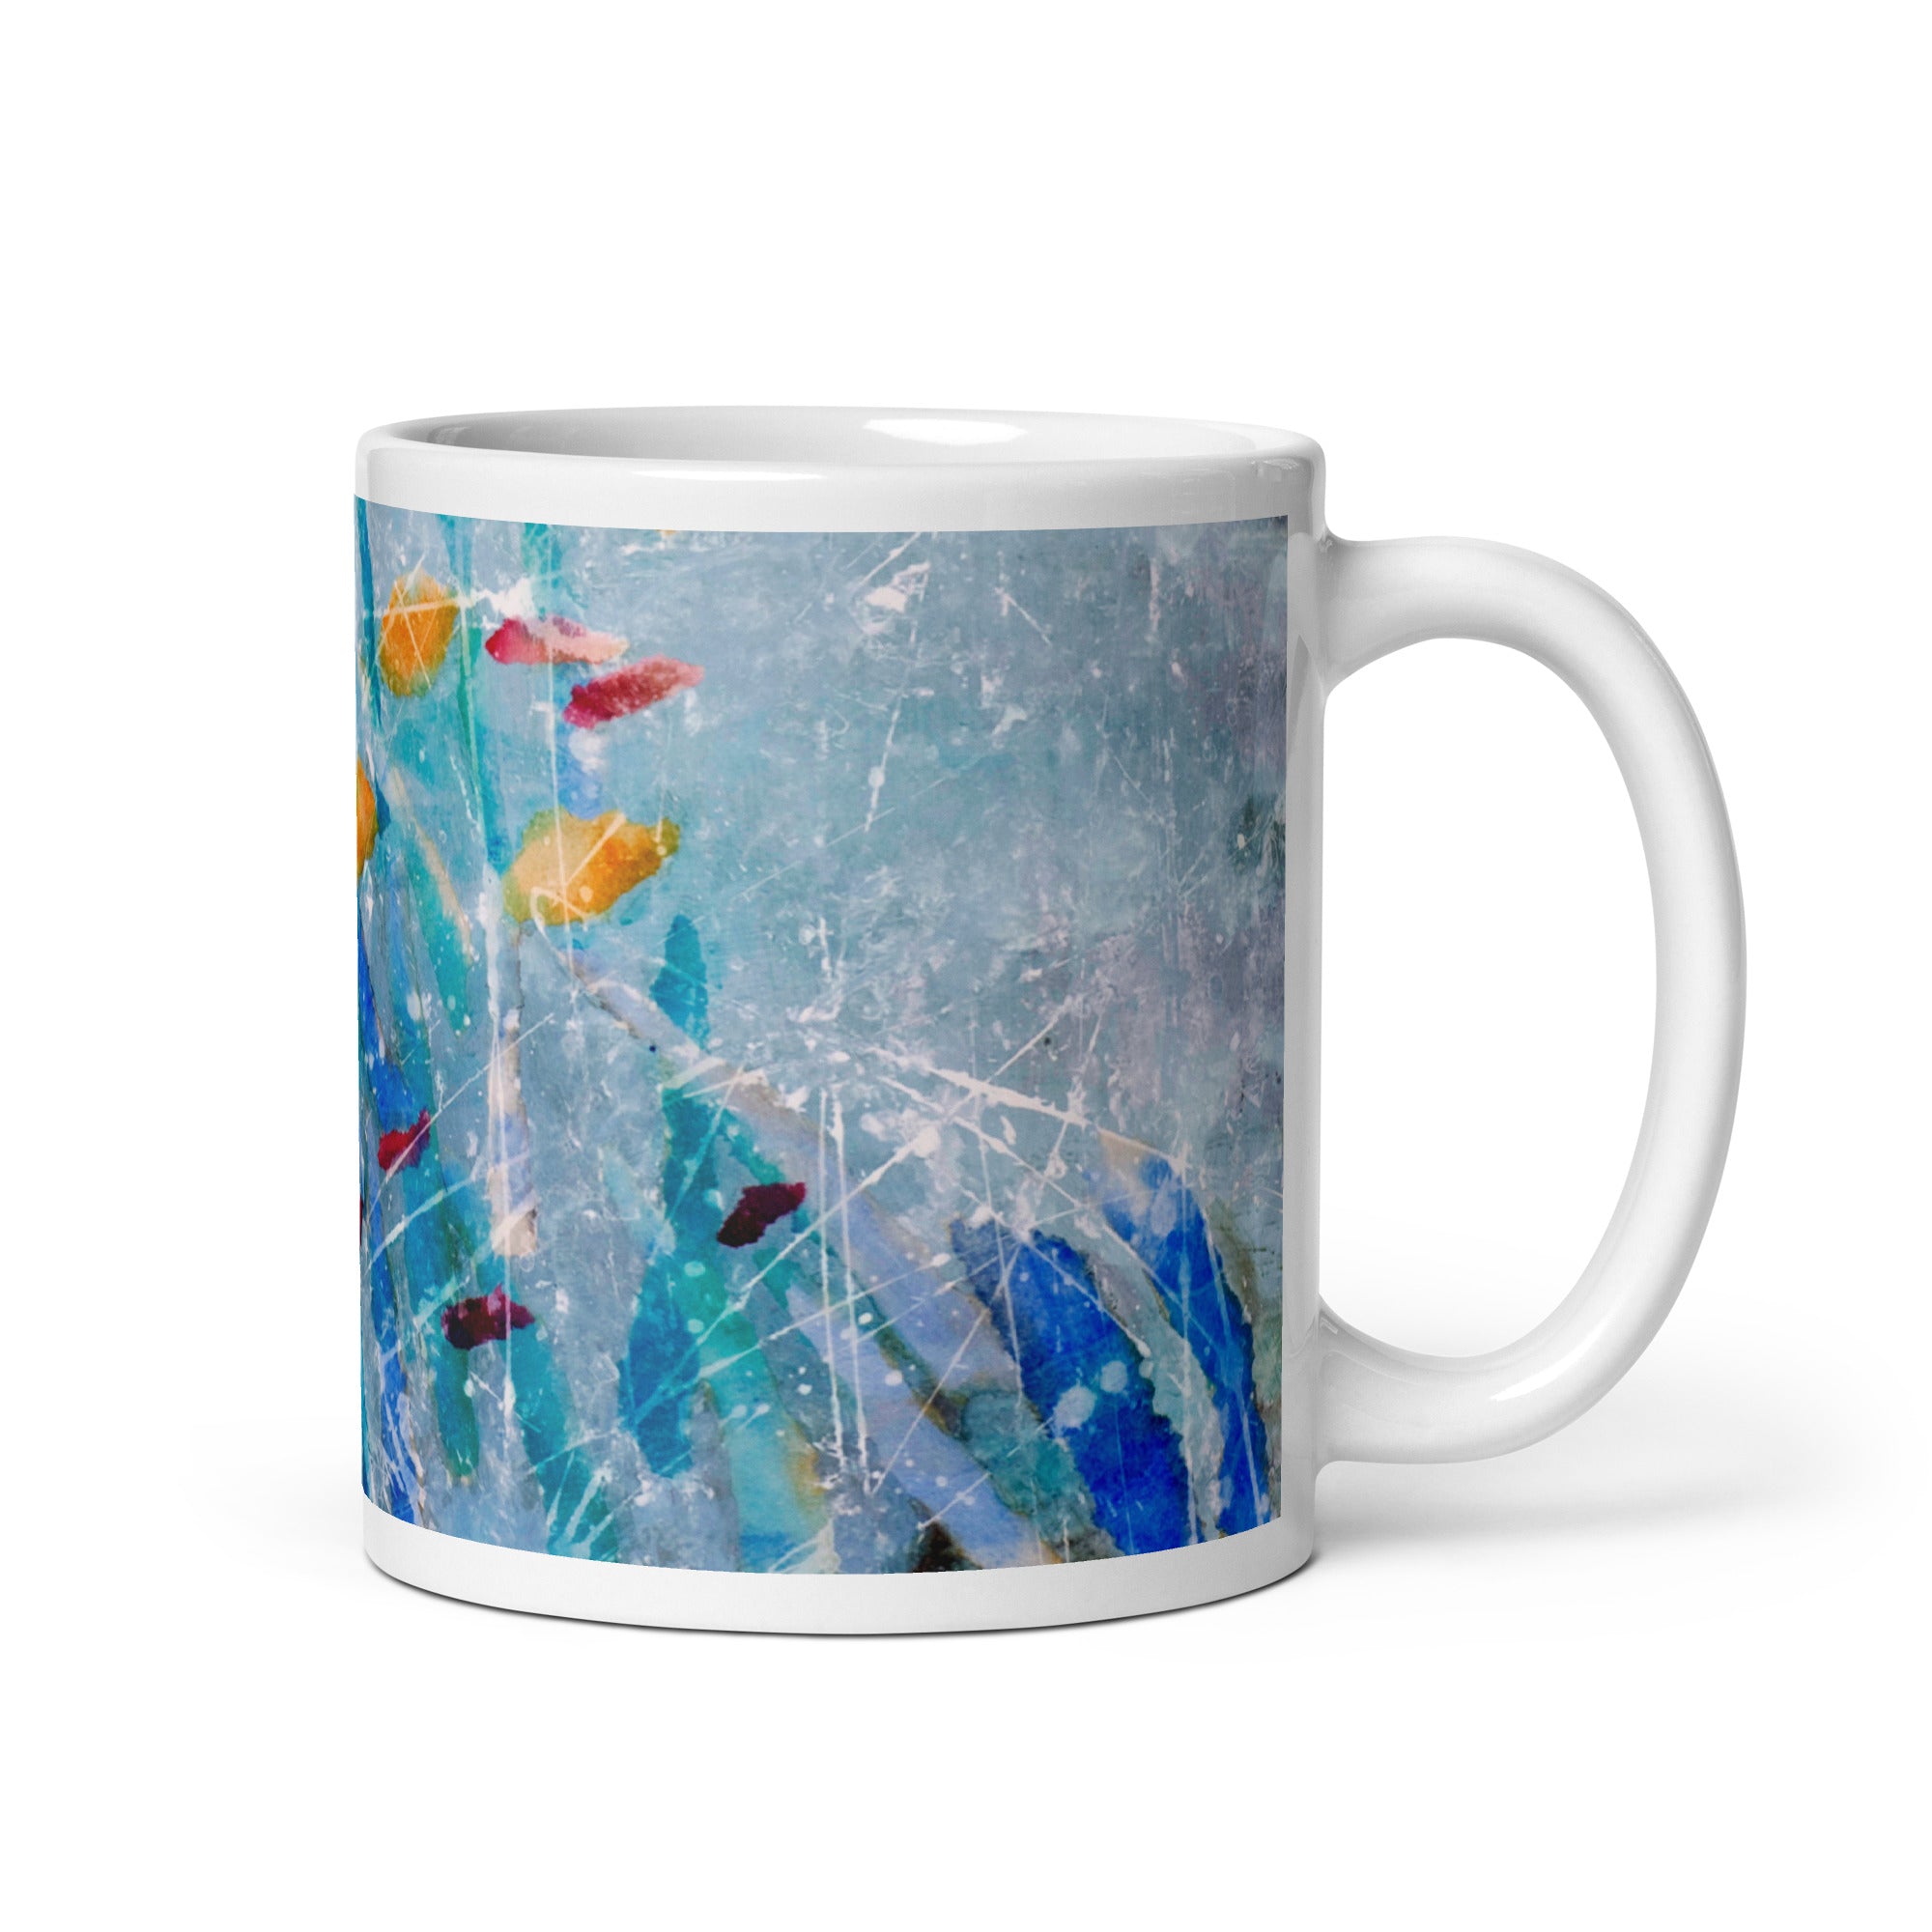 Aqua Sea Abstract White glossy mug - Art Love Decor